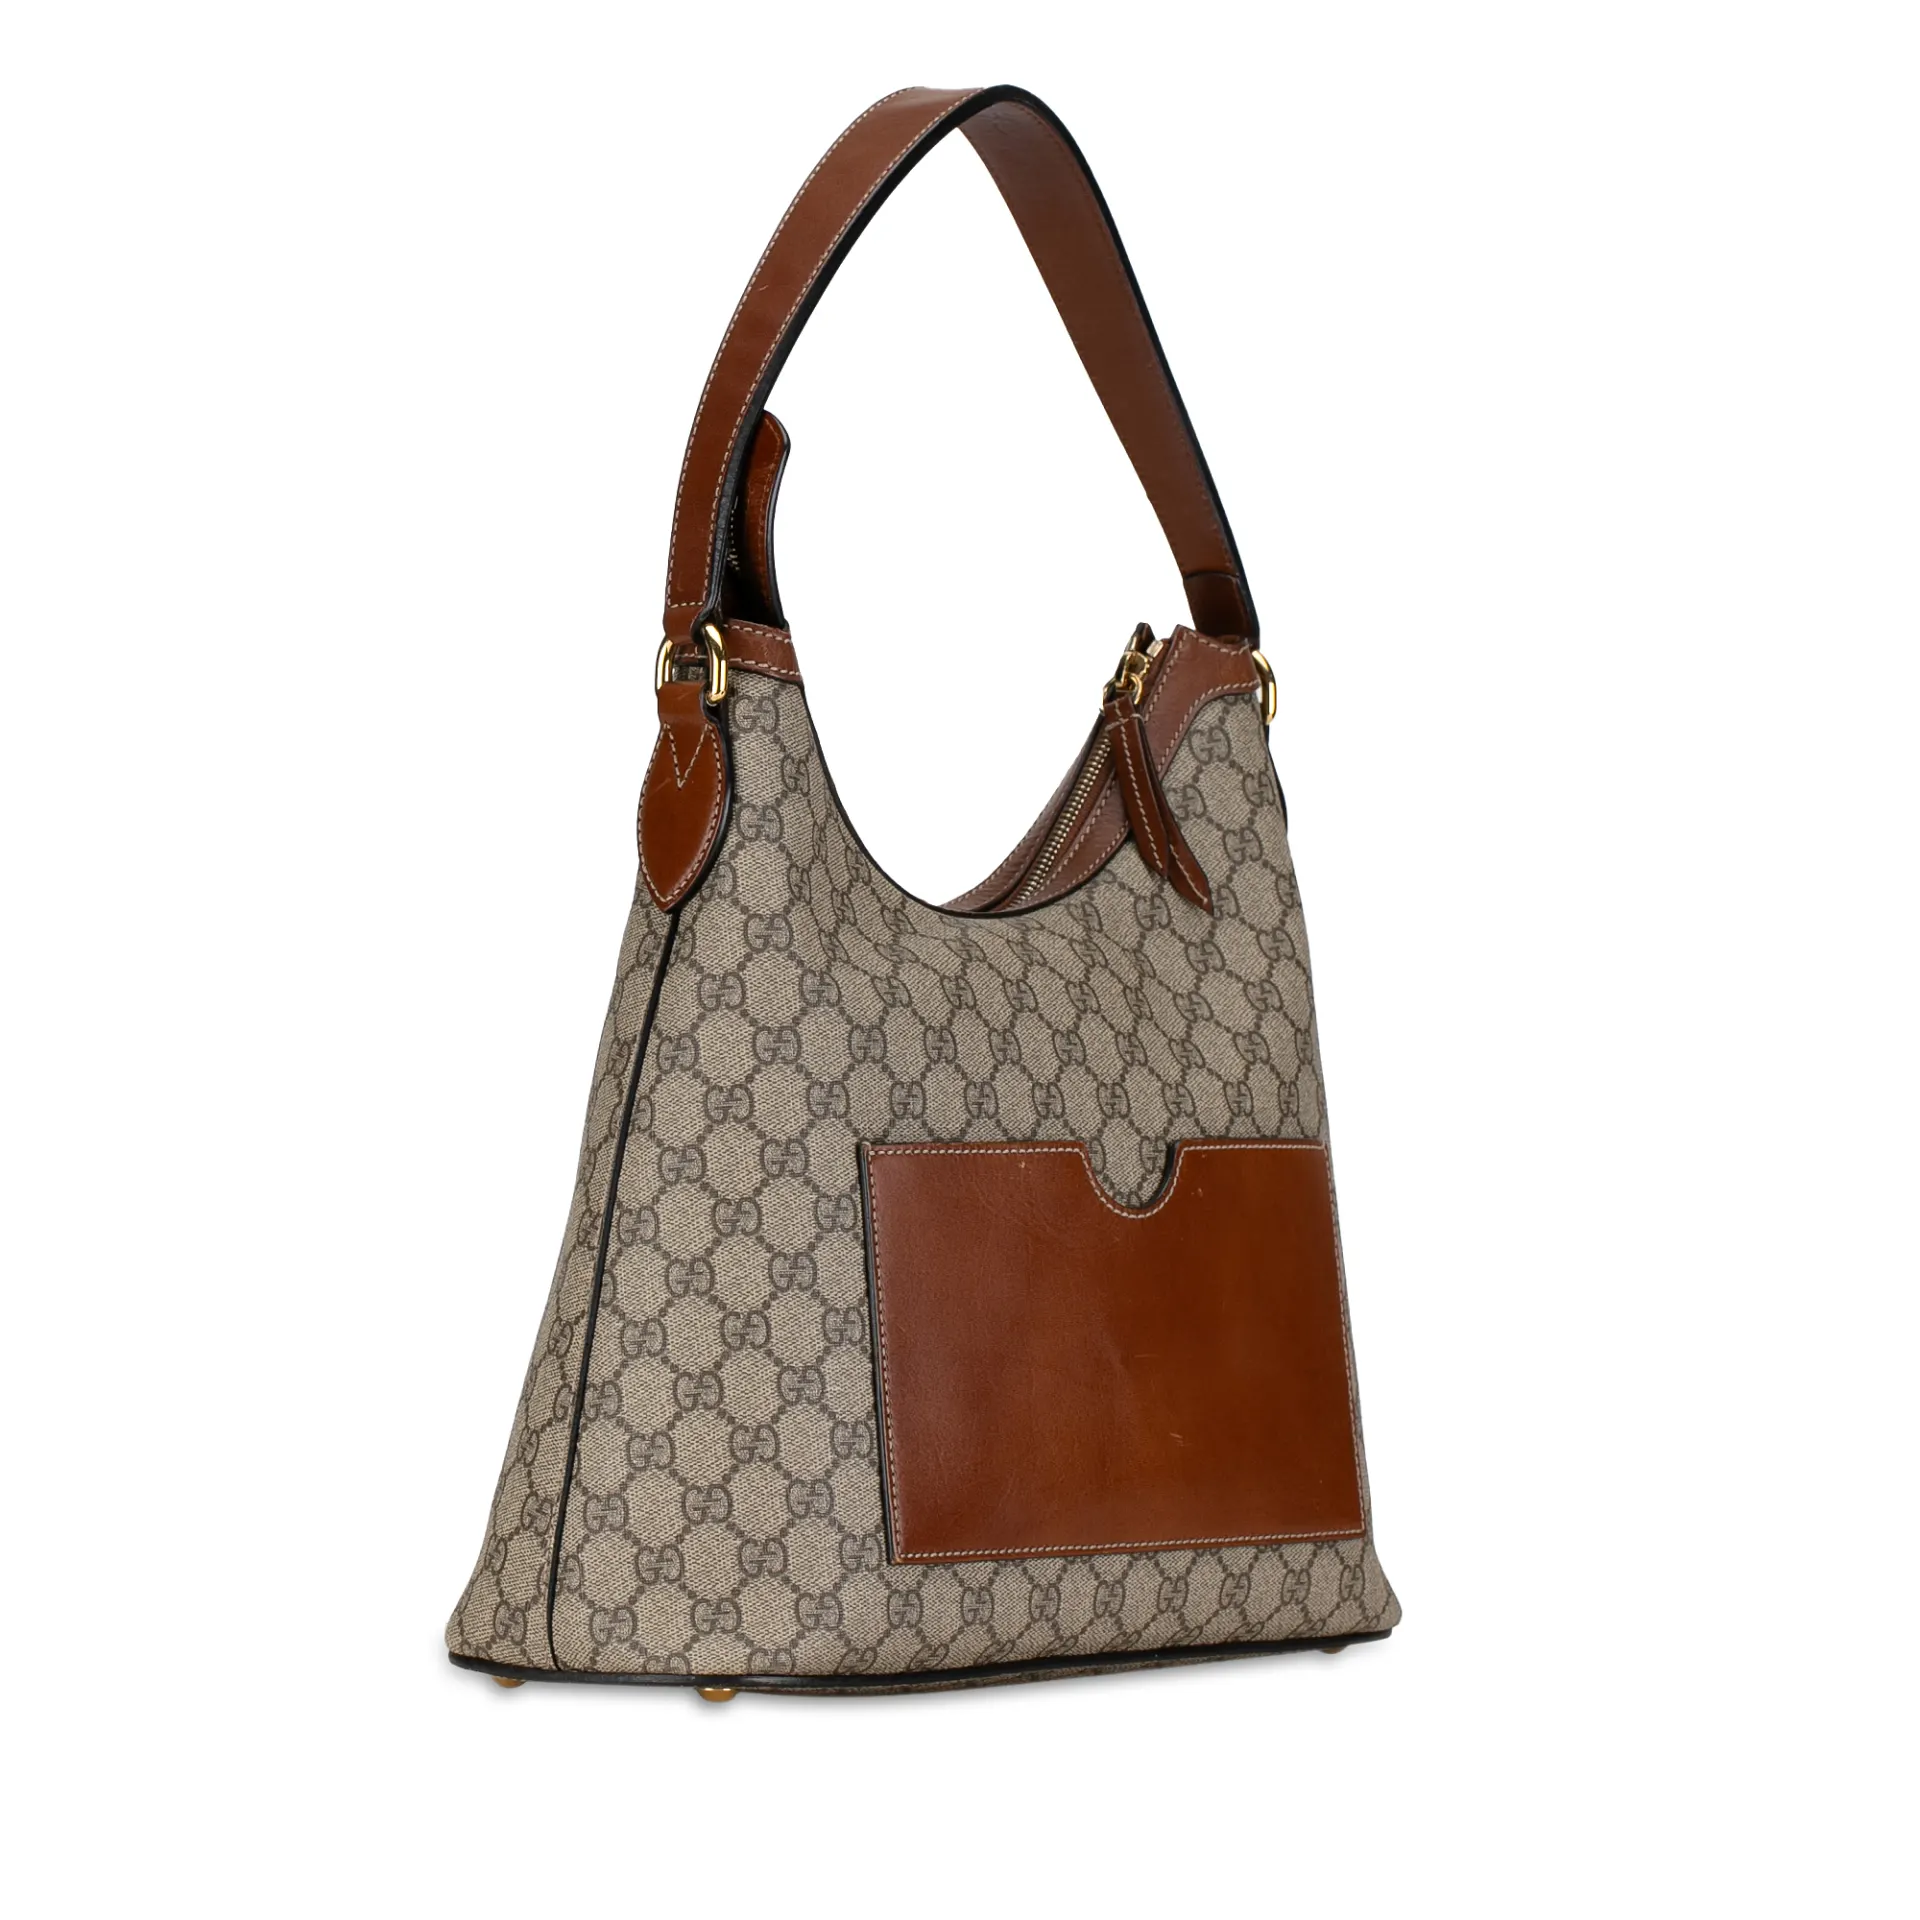 Gucci Gg Supreme Linea A Shoulder Bag